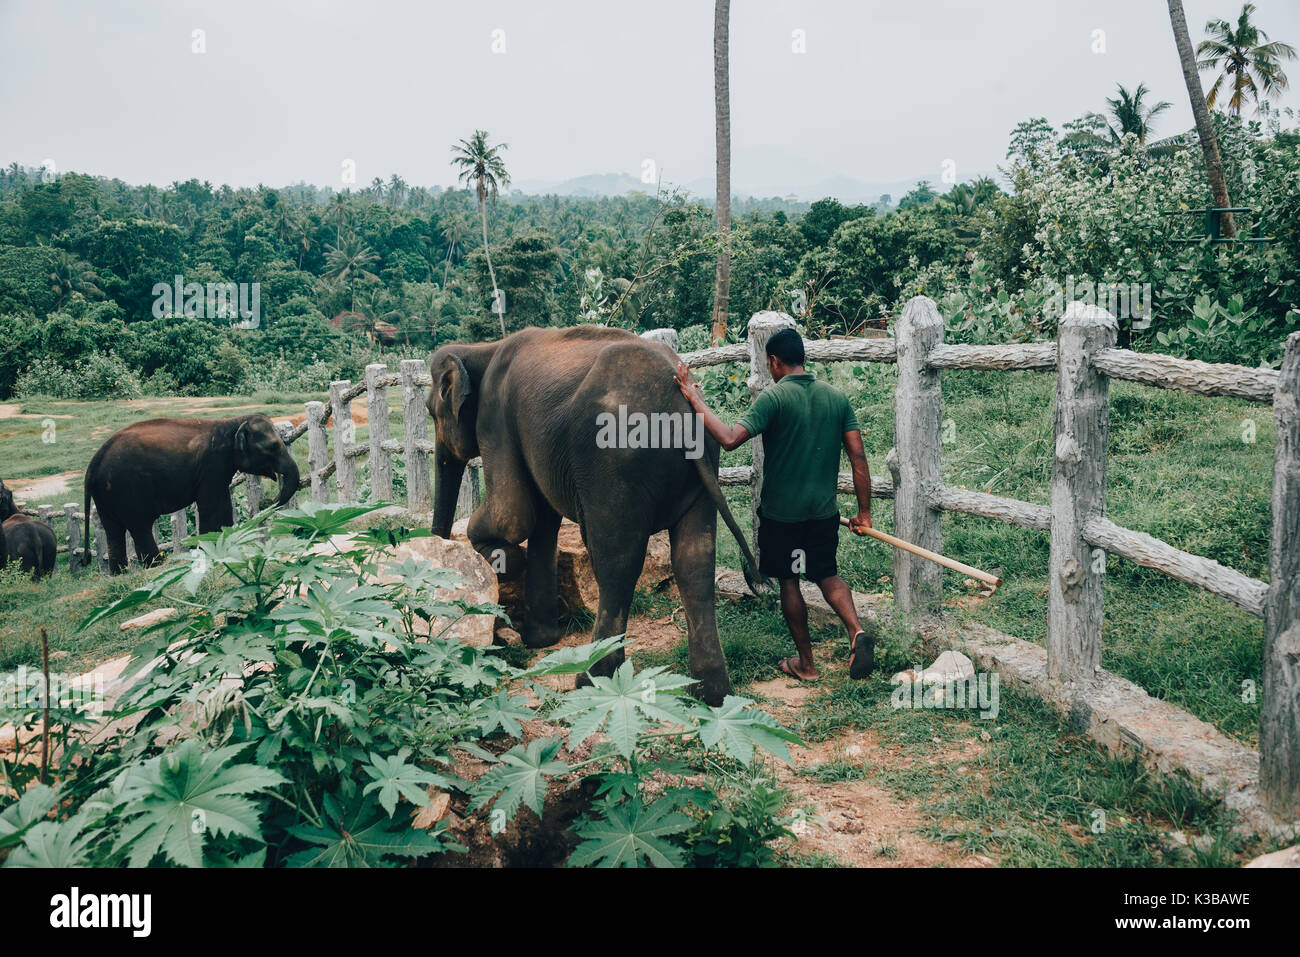 Distrito de Kegalle, Sri Lanka - Abril 18, 2017: Un joven elefante de Sri Lanka con su mahout cerca Kegalle, en la Provincia Central de Sri Lanka. La Sri Lanka Foto de stock